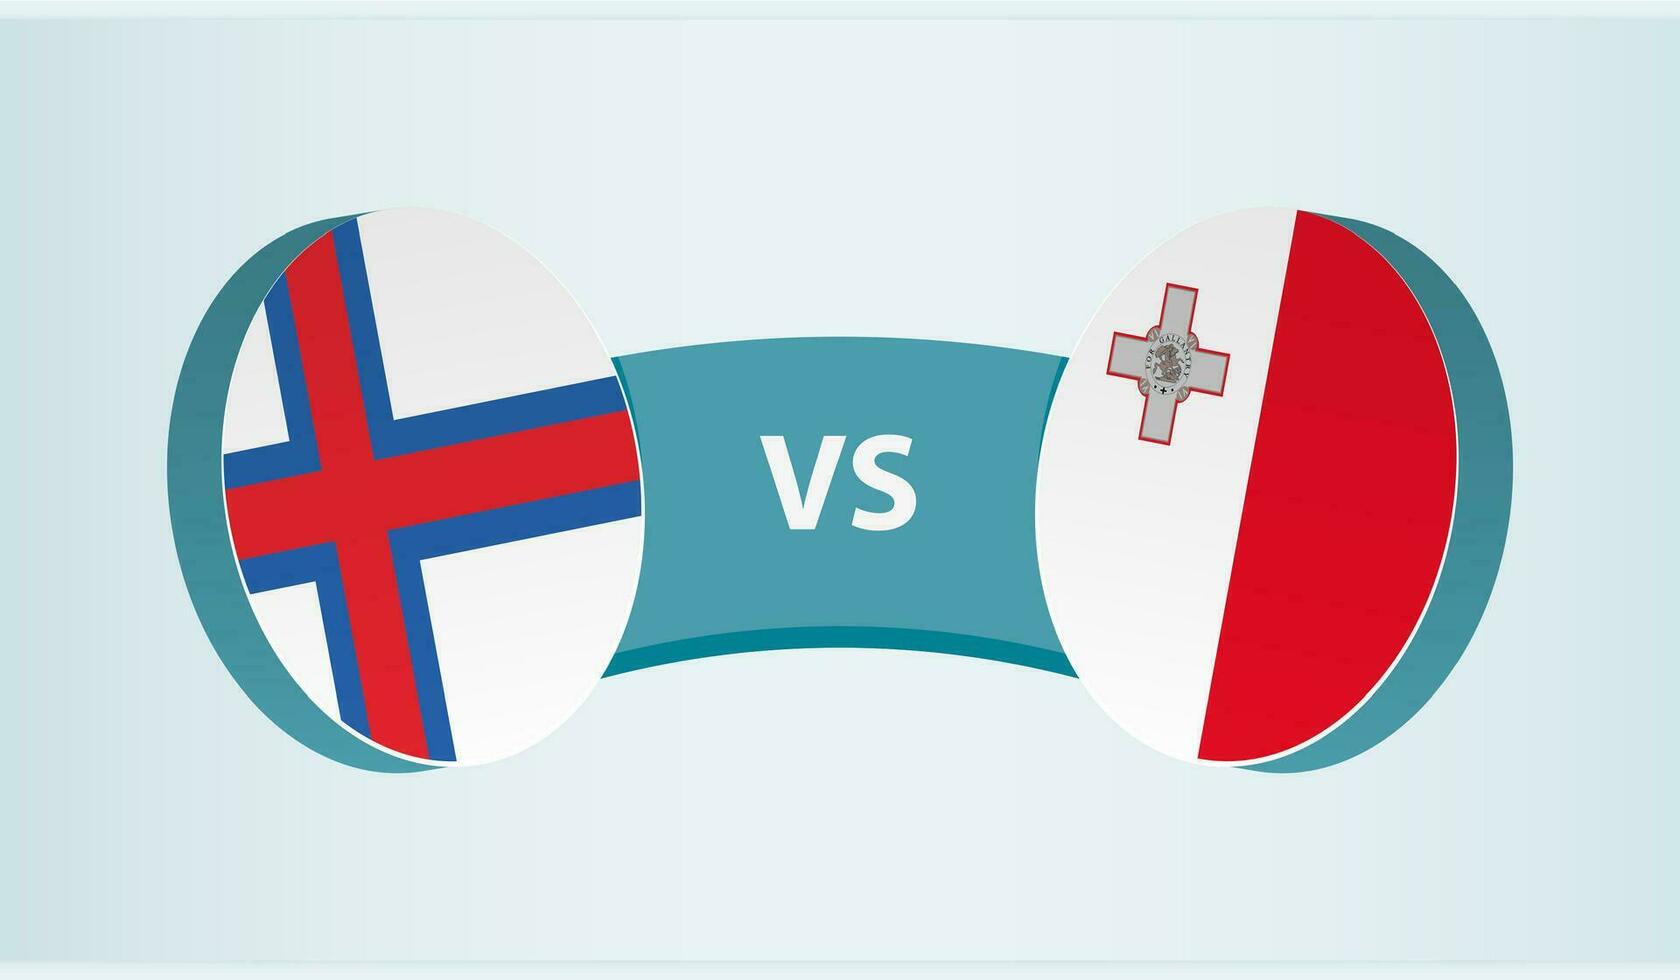 Faroe Islands versus Malta, team sports competition concept. vector